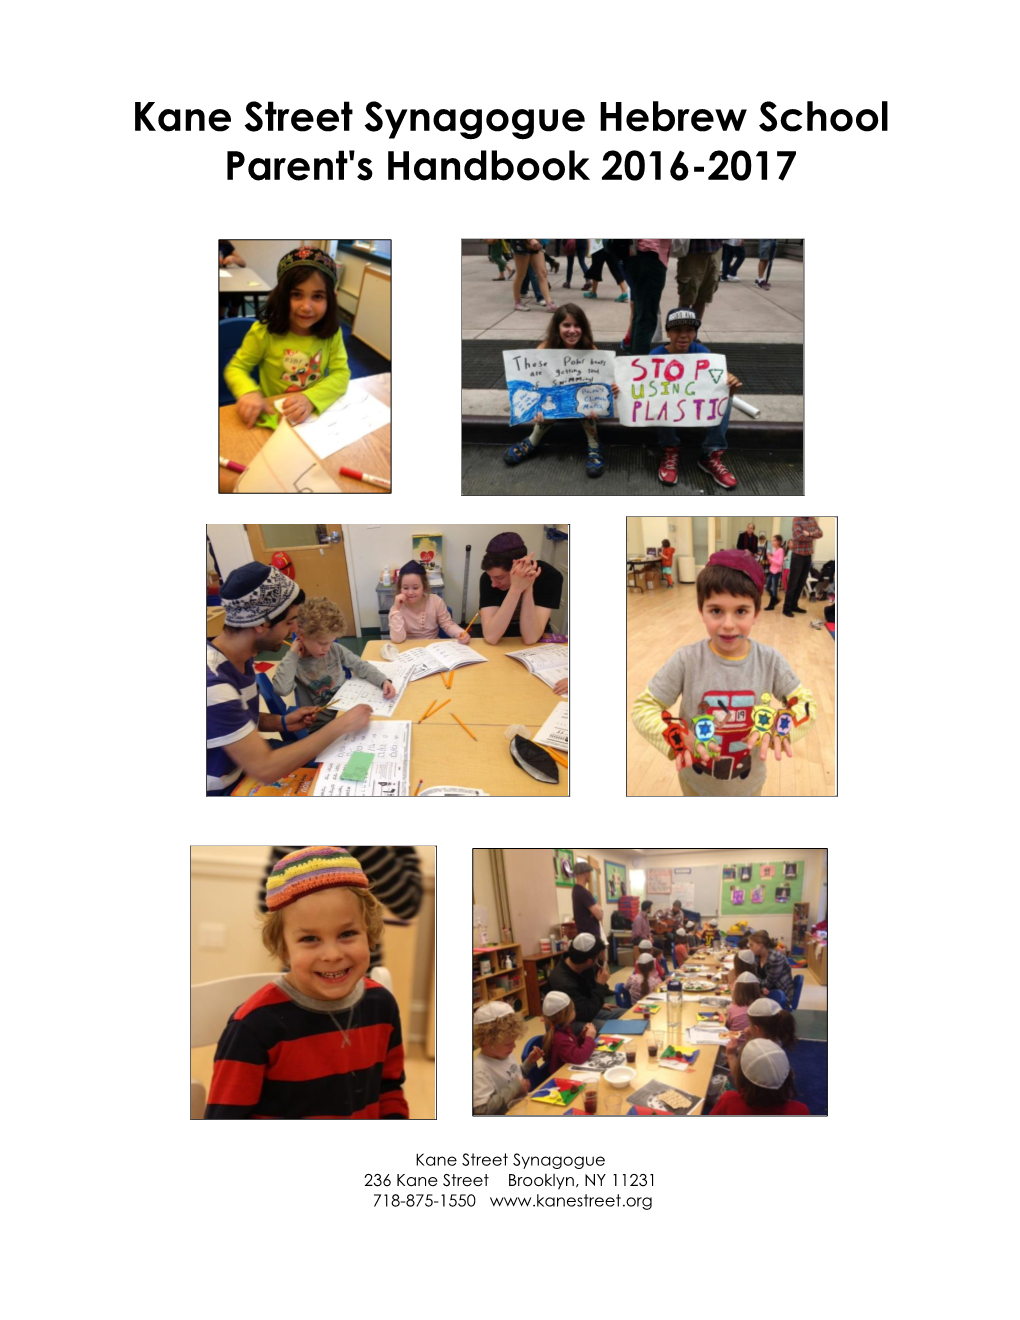 Parent's Handbook 2016-2017